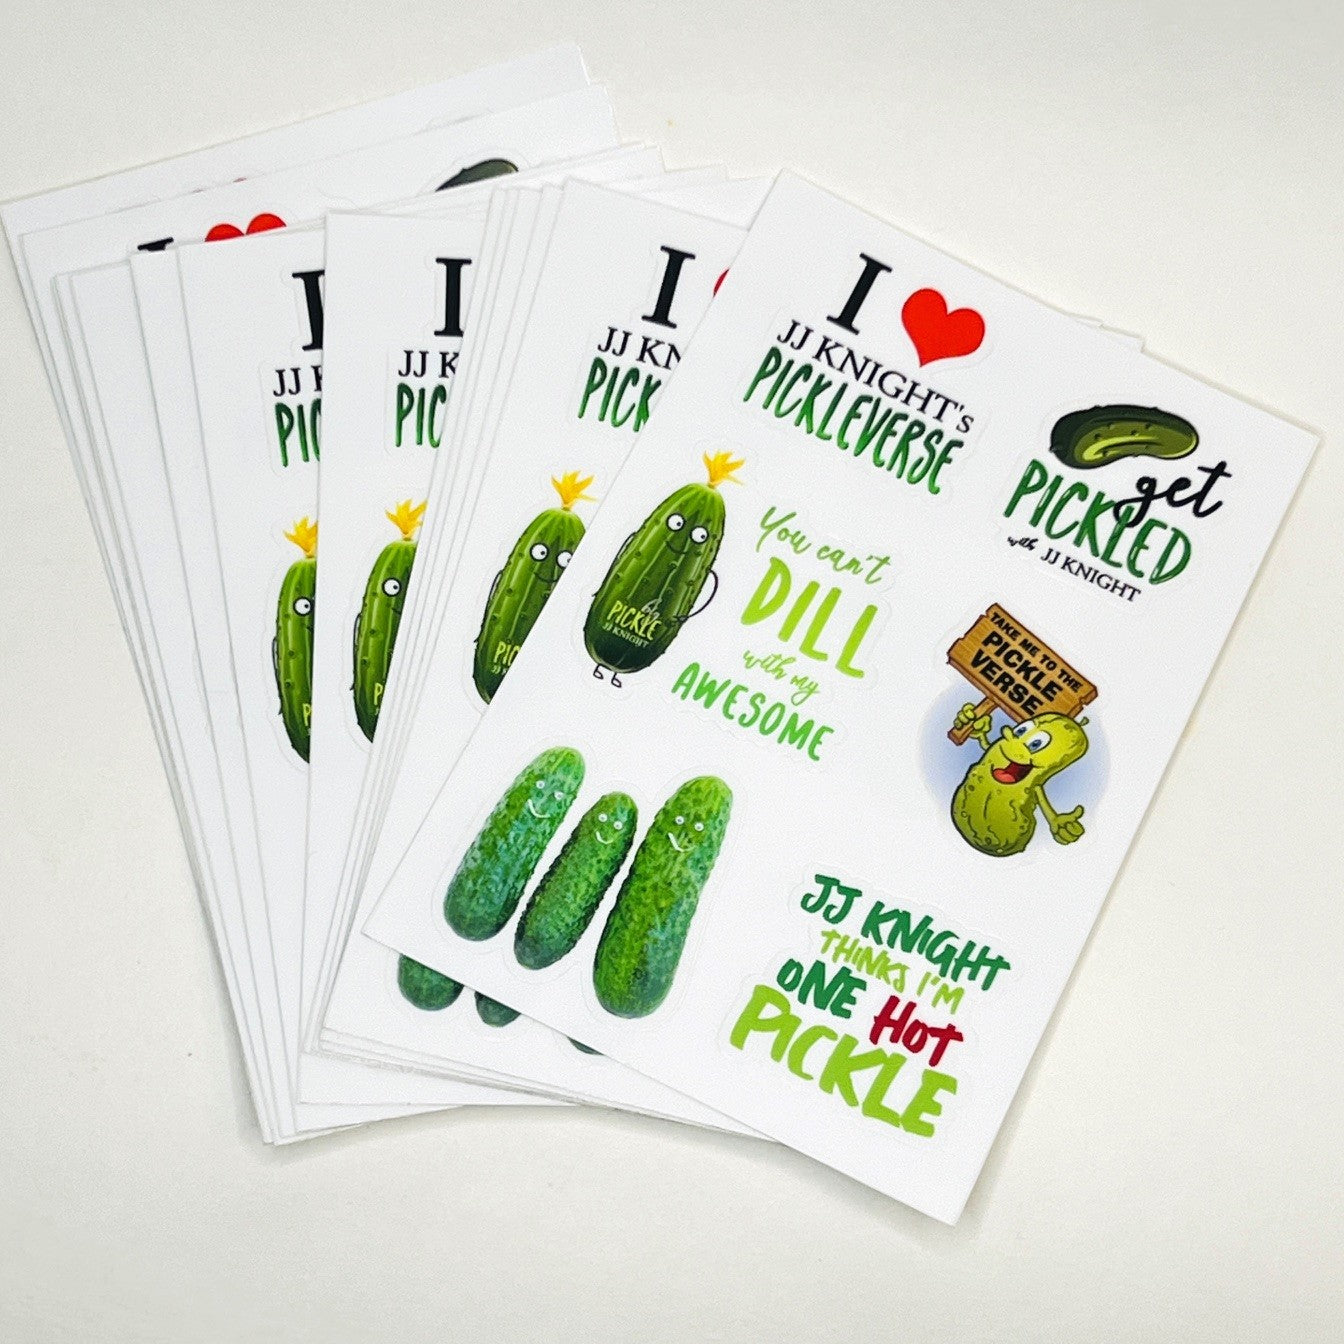 Pickle sticker sheets